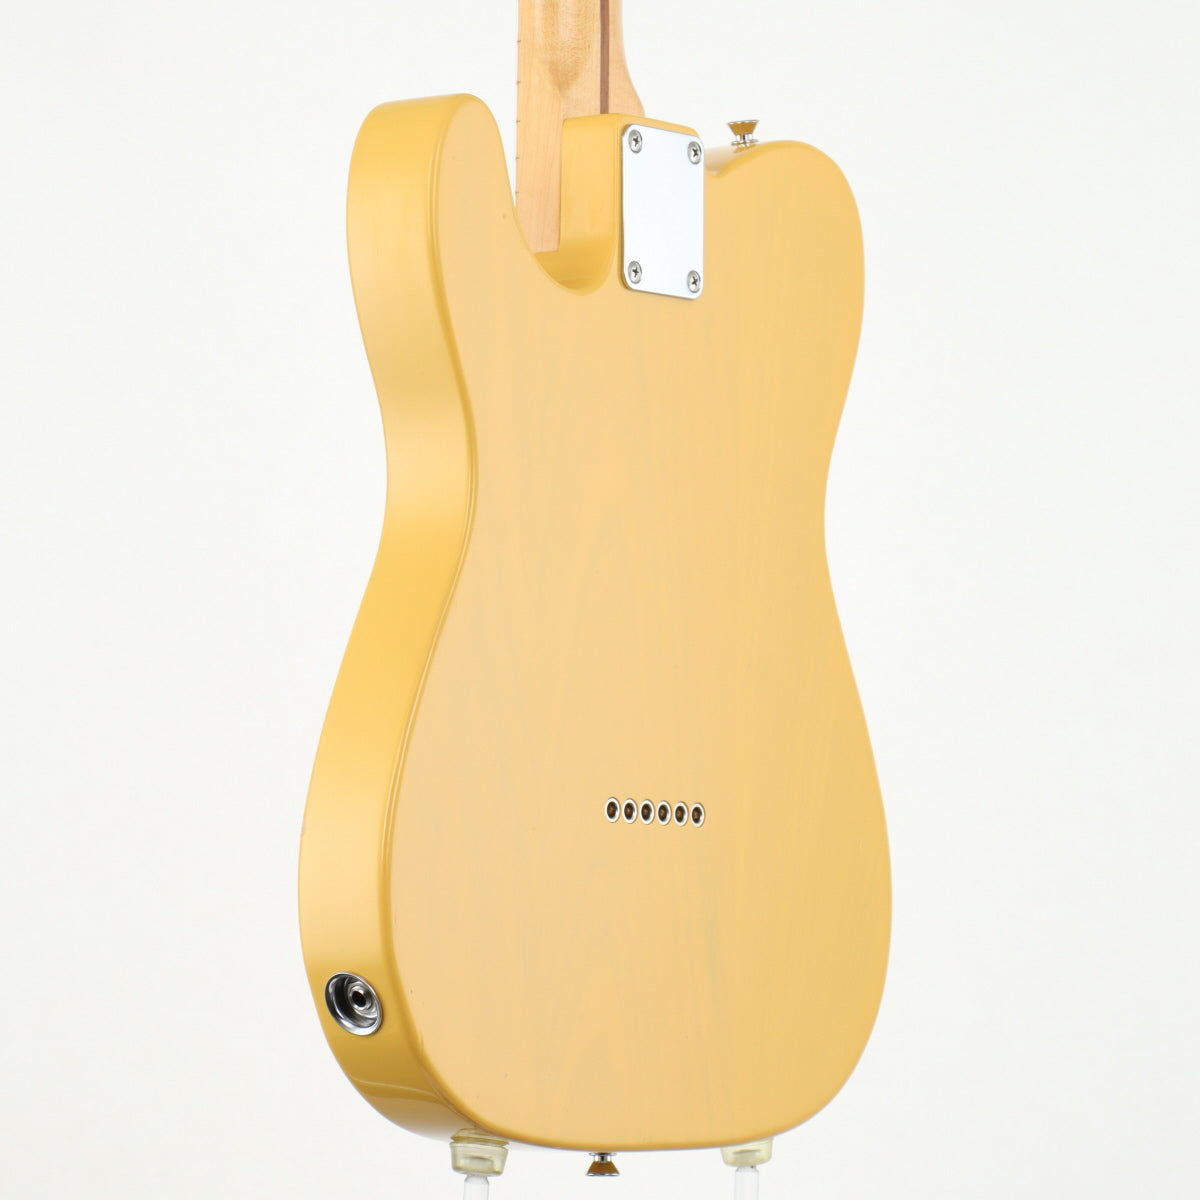 [SN JD23005474] USED Fender / Heritage 50s Telecaster Butte Scotch Blonde [12]